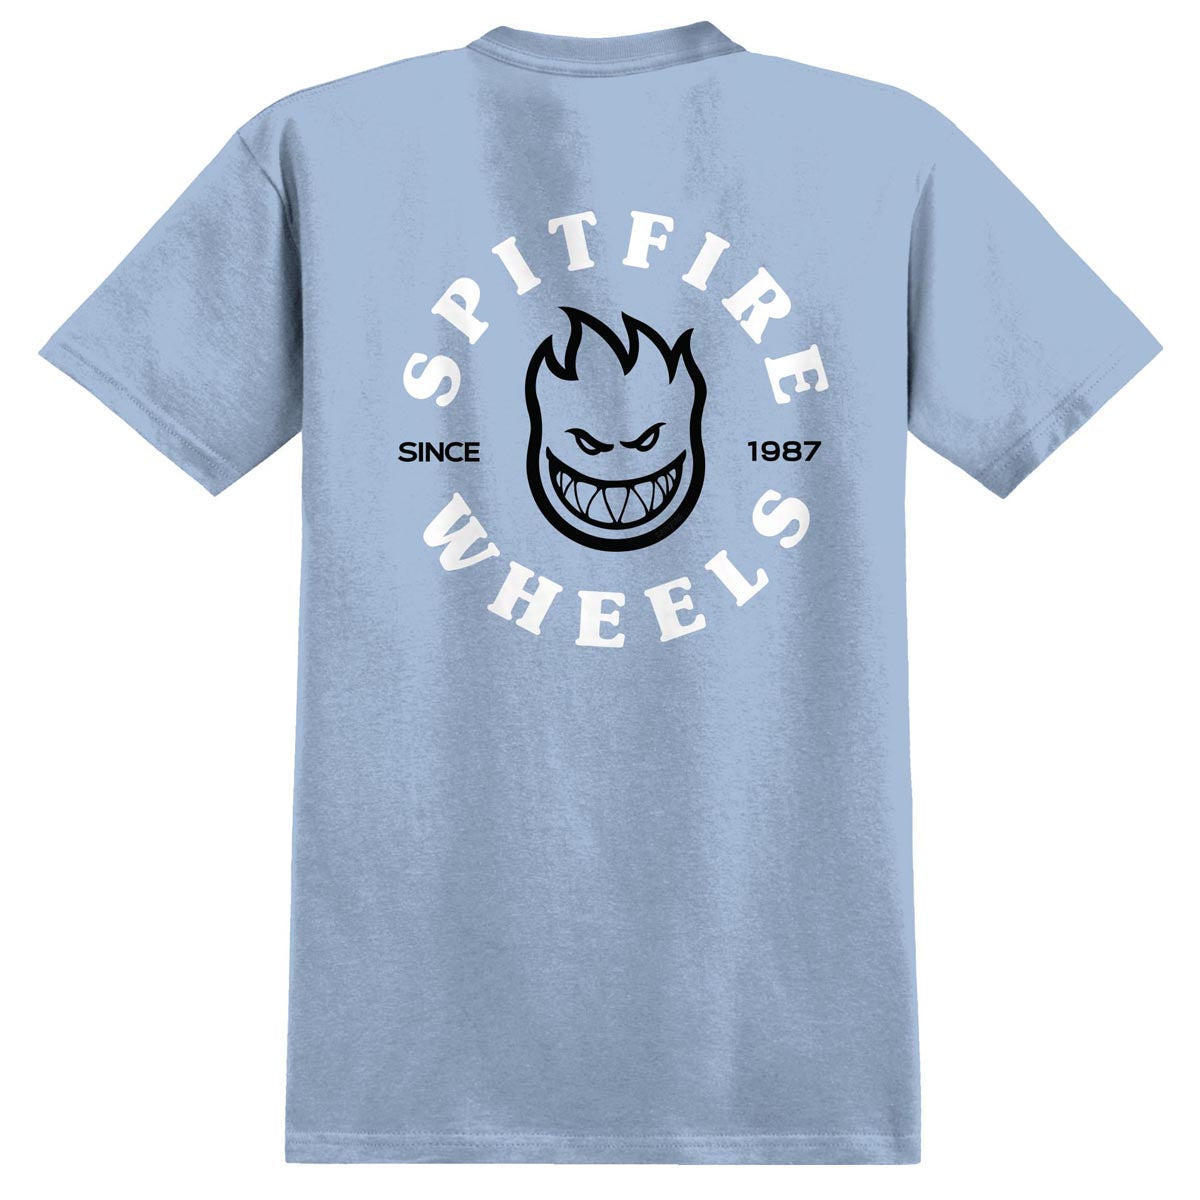 Spitfire Bighead Classic T-Shirt - Light Blue/Black/White image 2